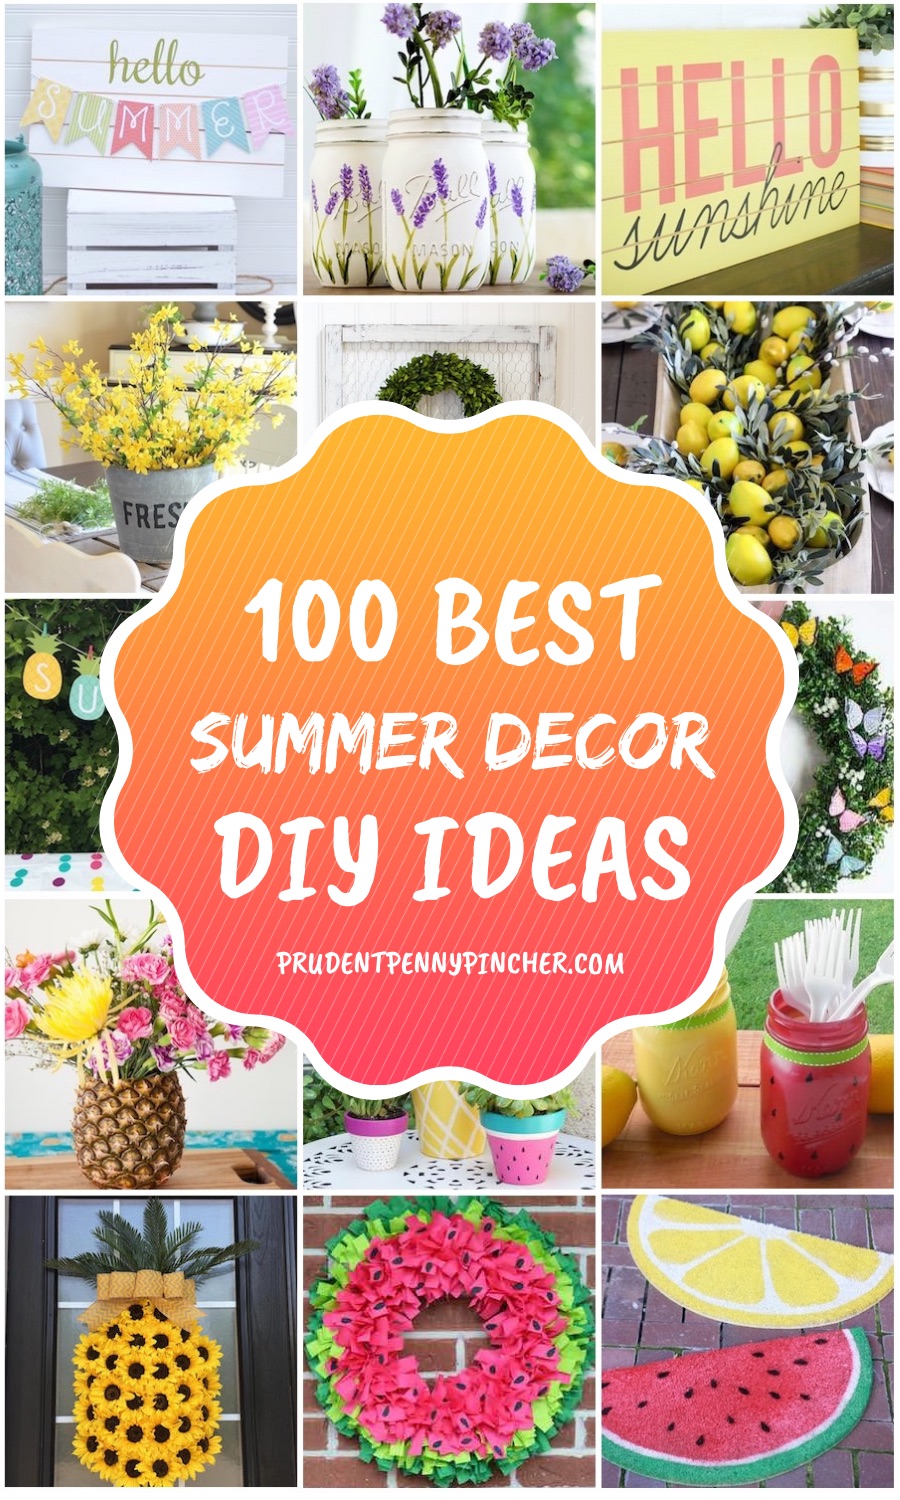 100 Best DIY Summer Decor Ideas - Prudent Penny Pincher